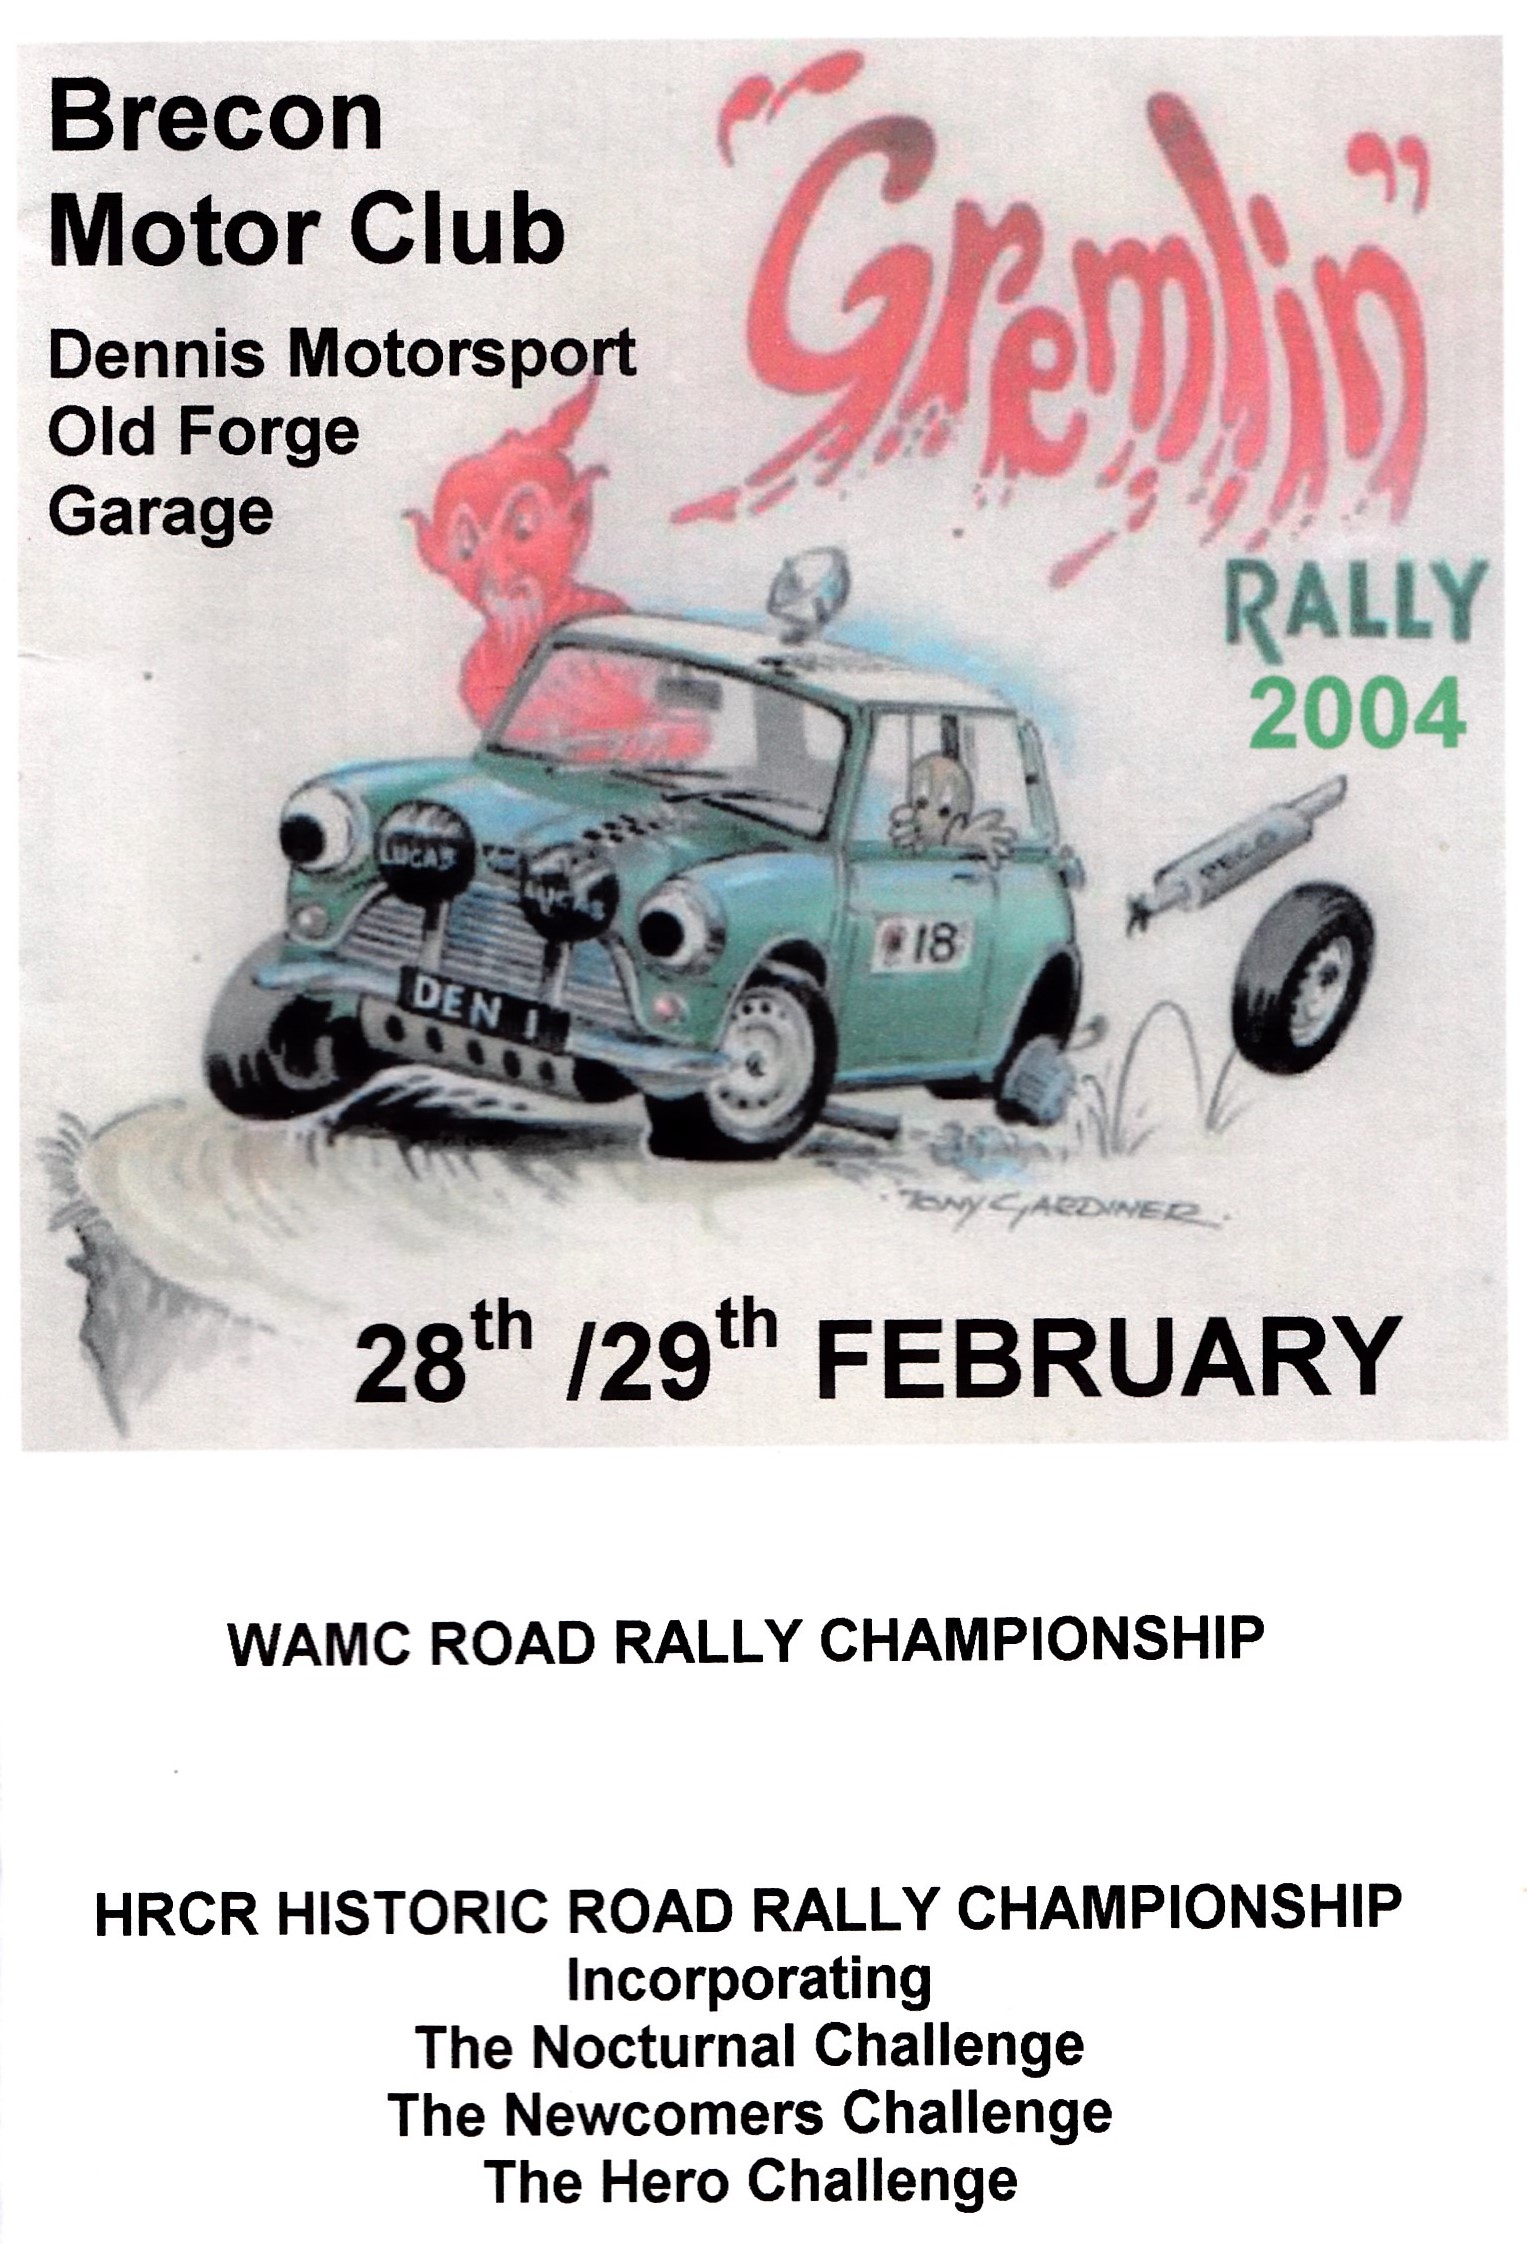 Gremlin Rally 2004